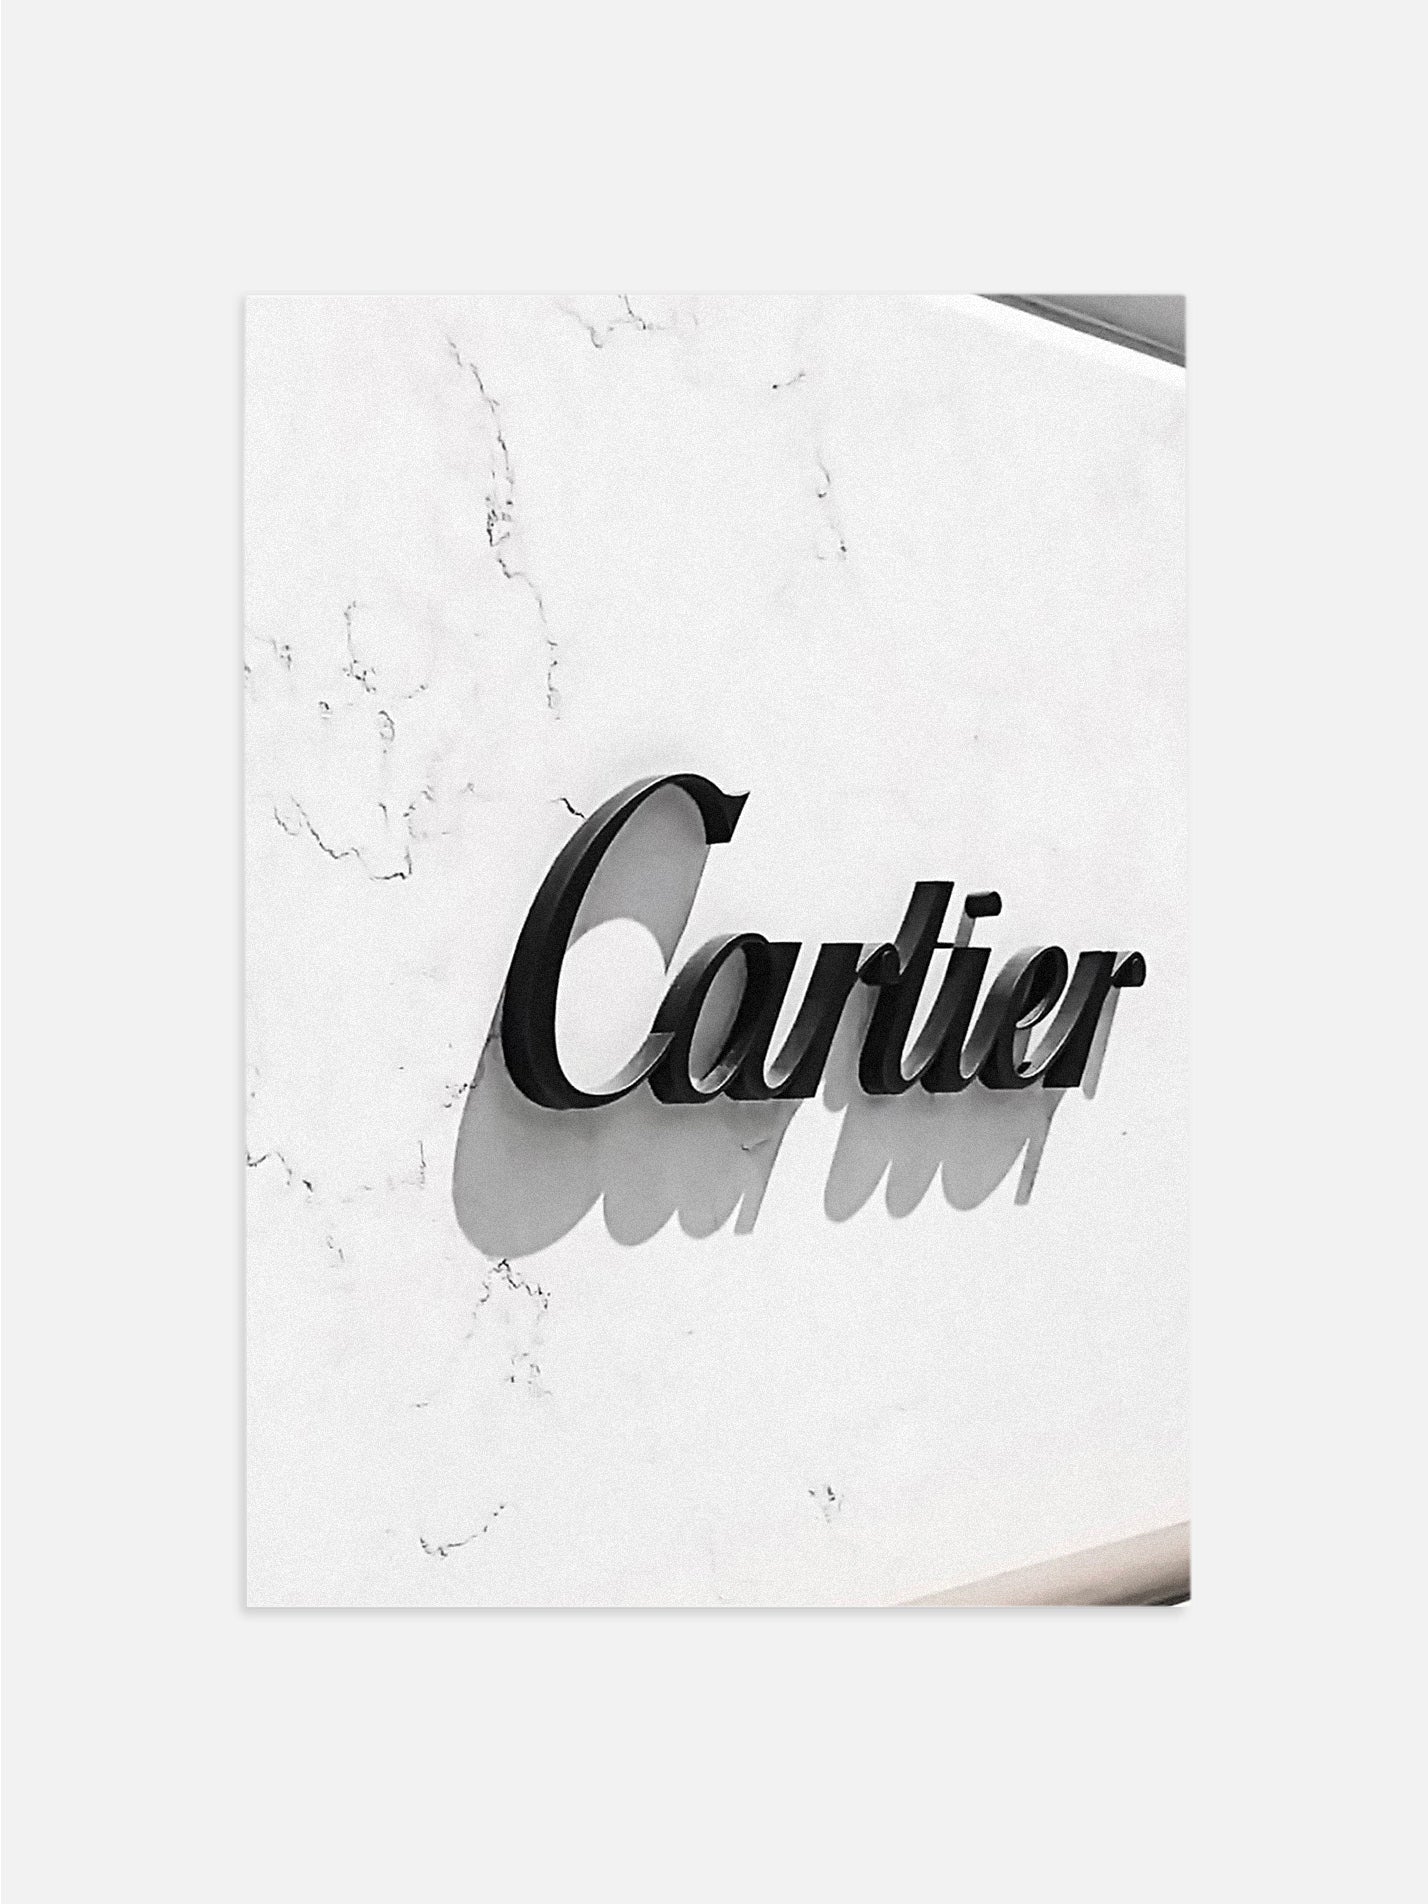 Cartier Store